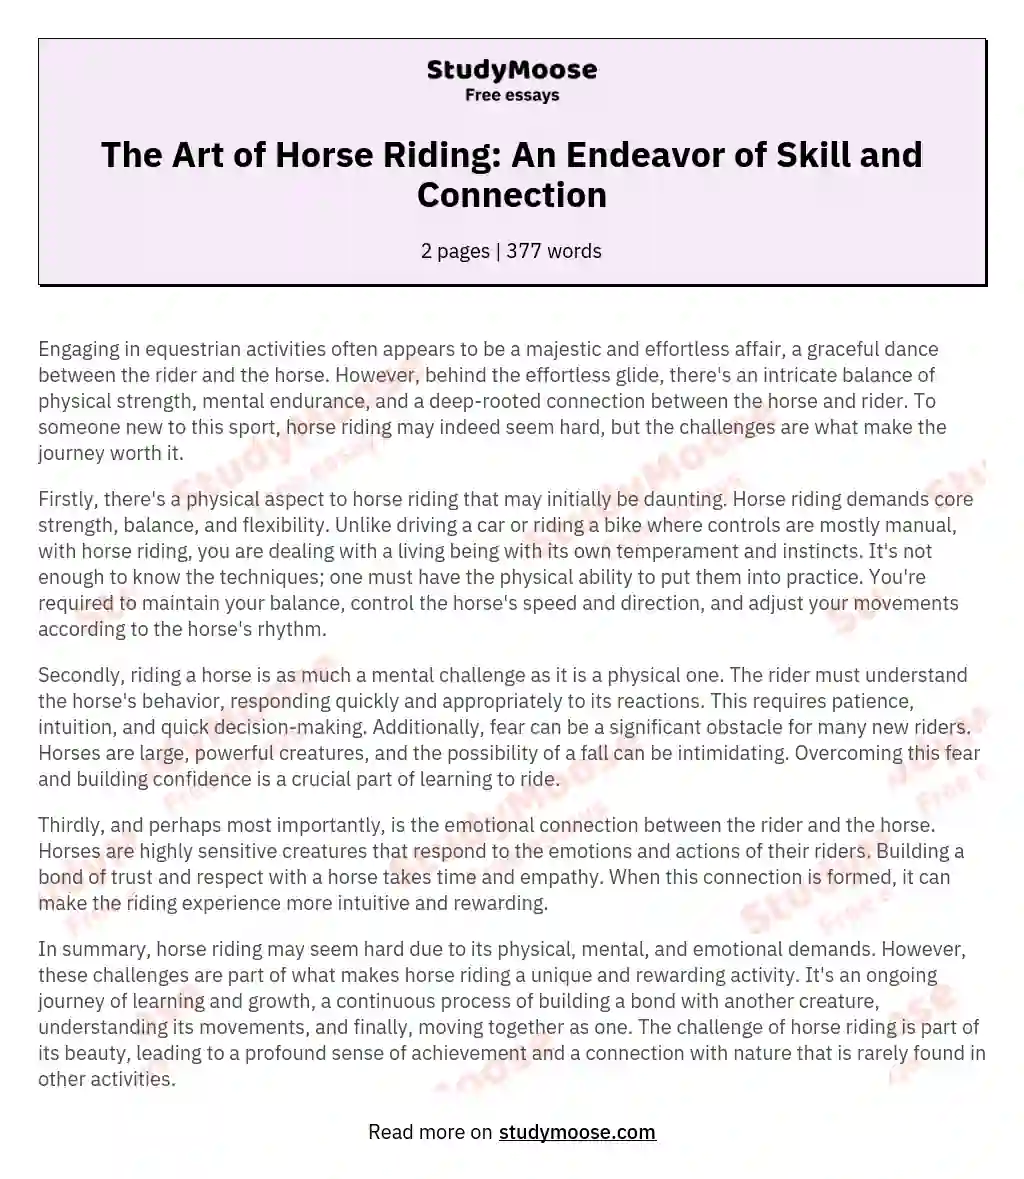 horse riding essay